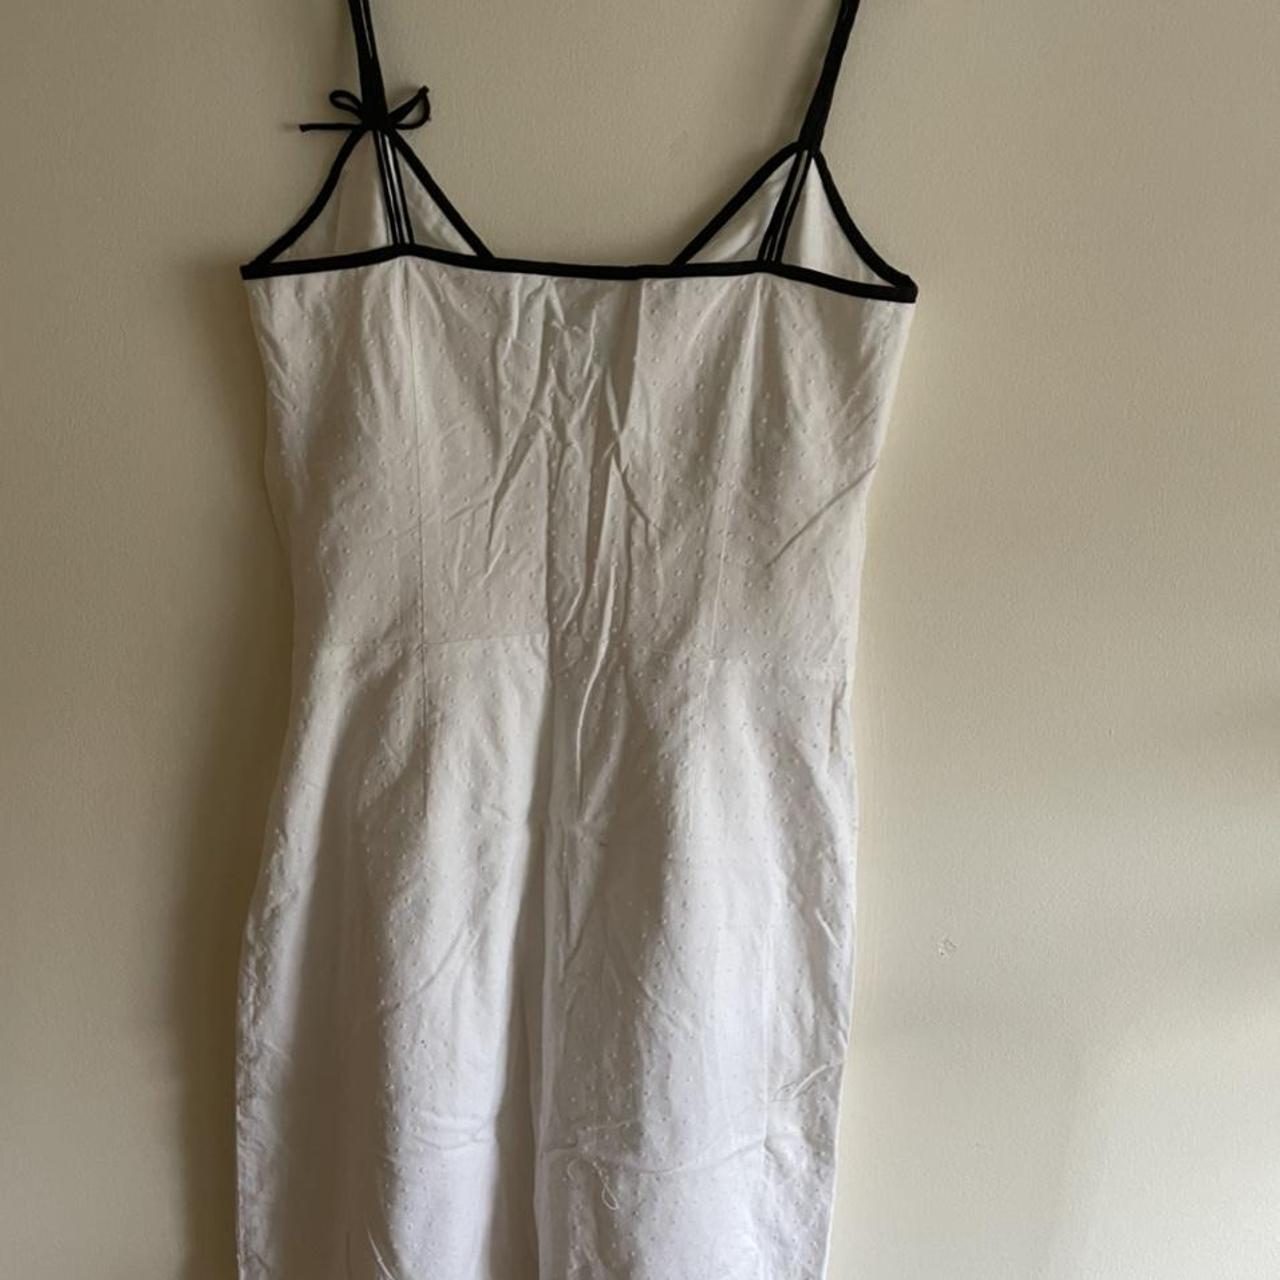 Vintage kookai white dress with black stitching;... - Depop